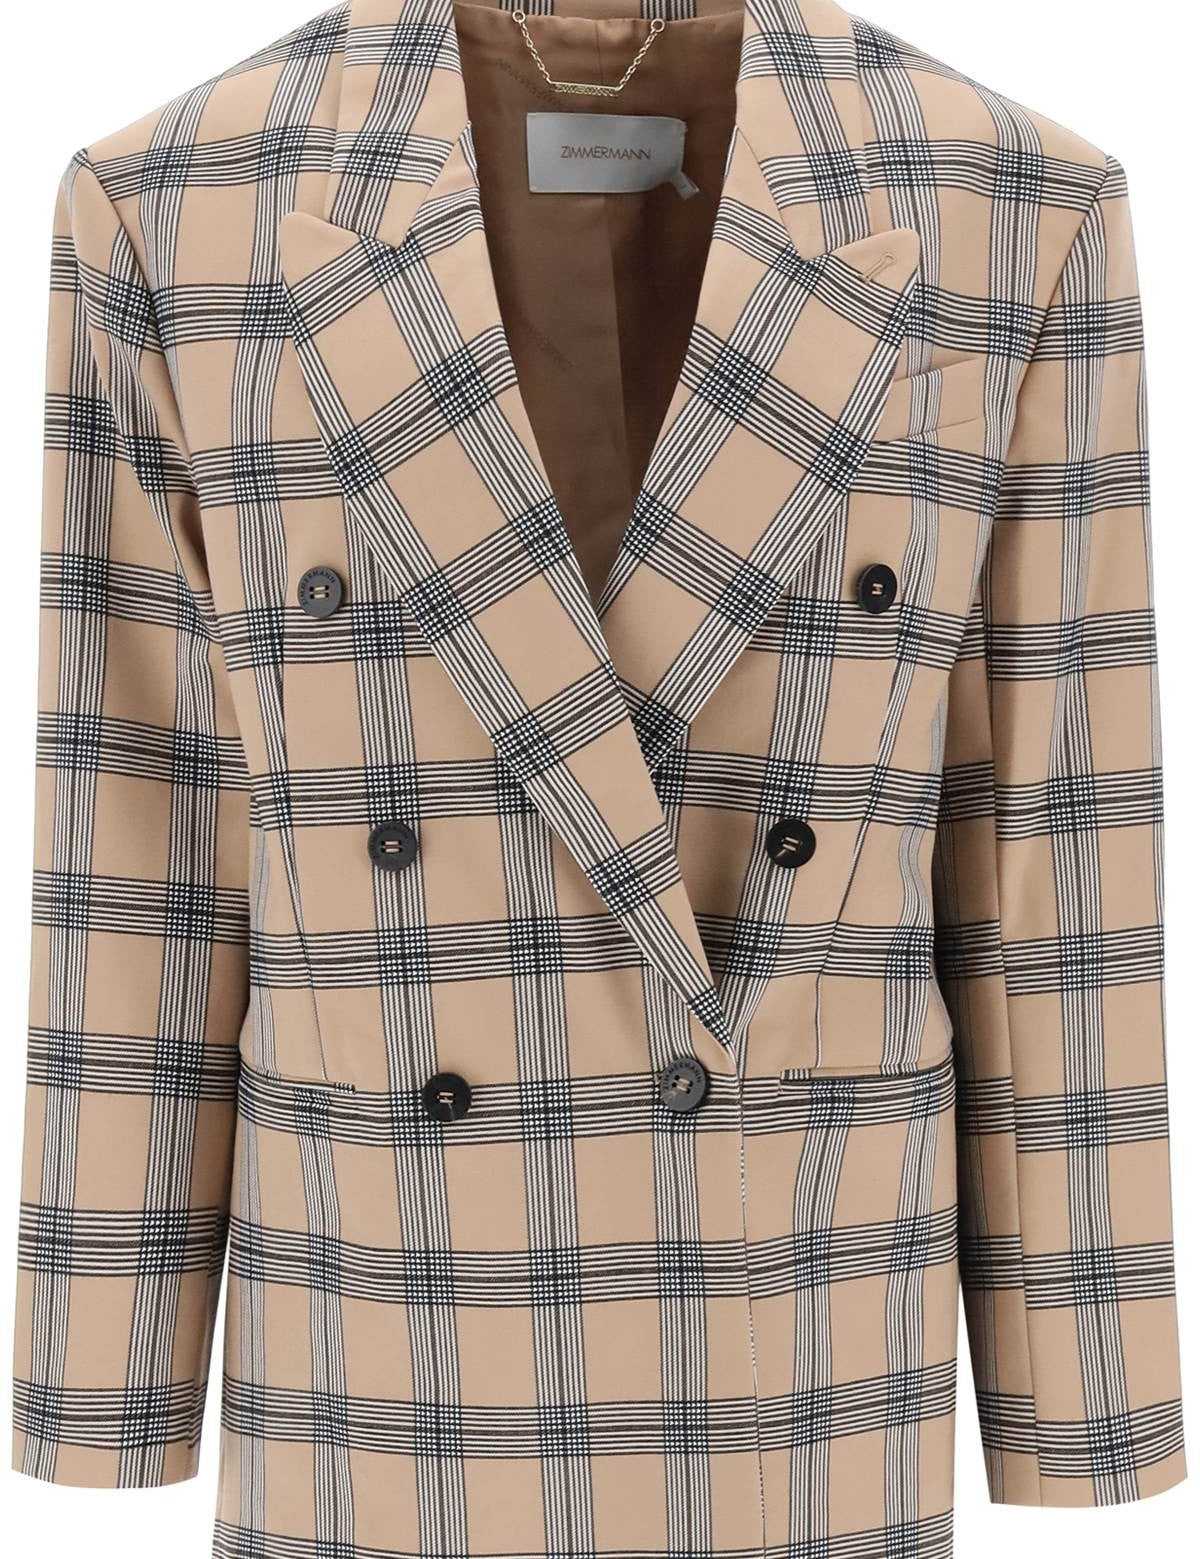 zimmermann-oversized-luminosity-jacket-with-check-motif.jpg